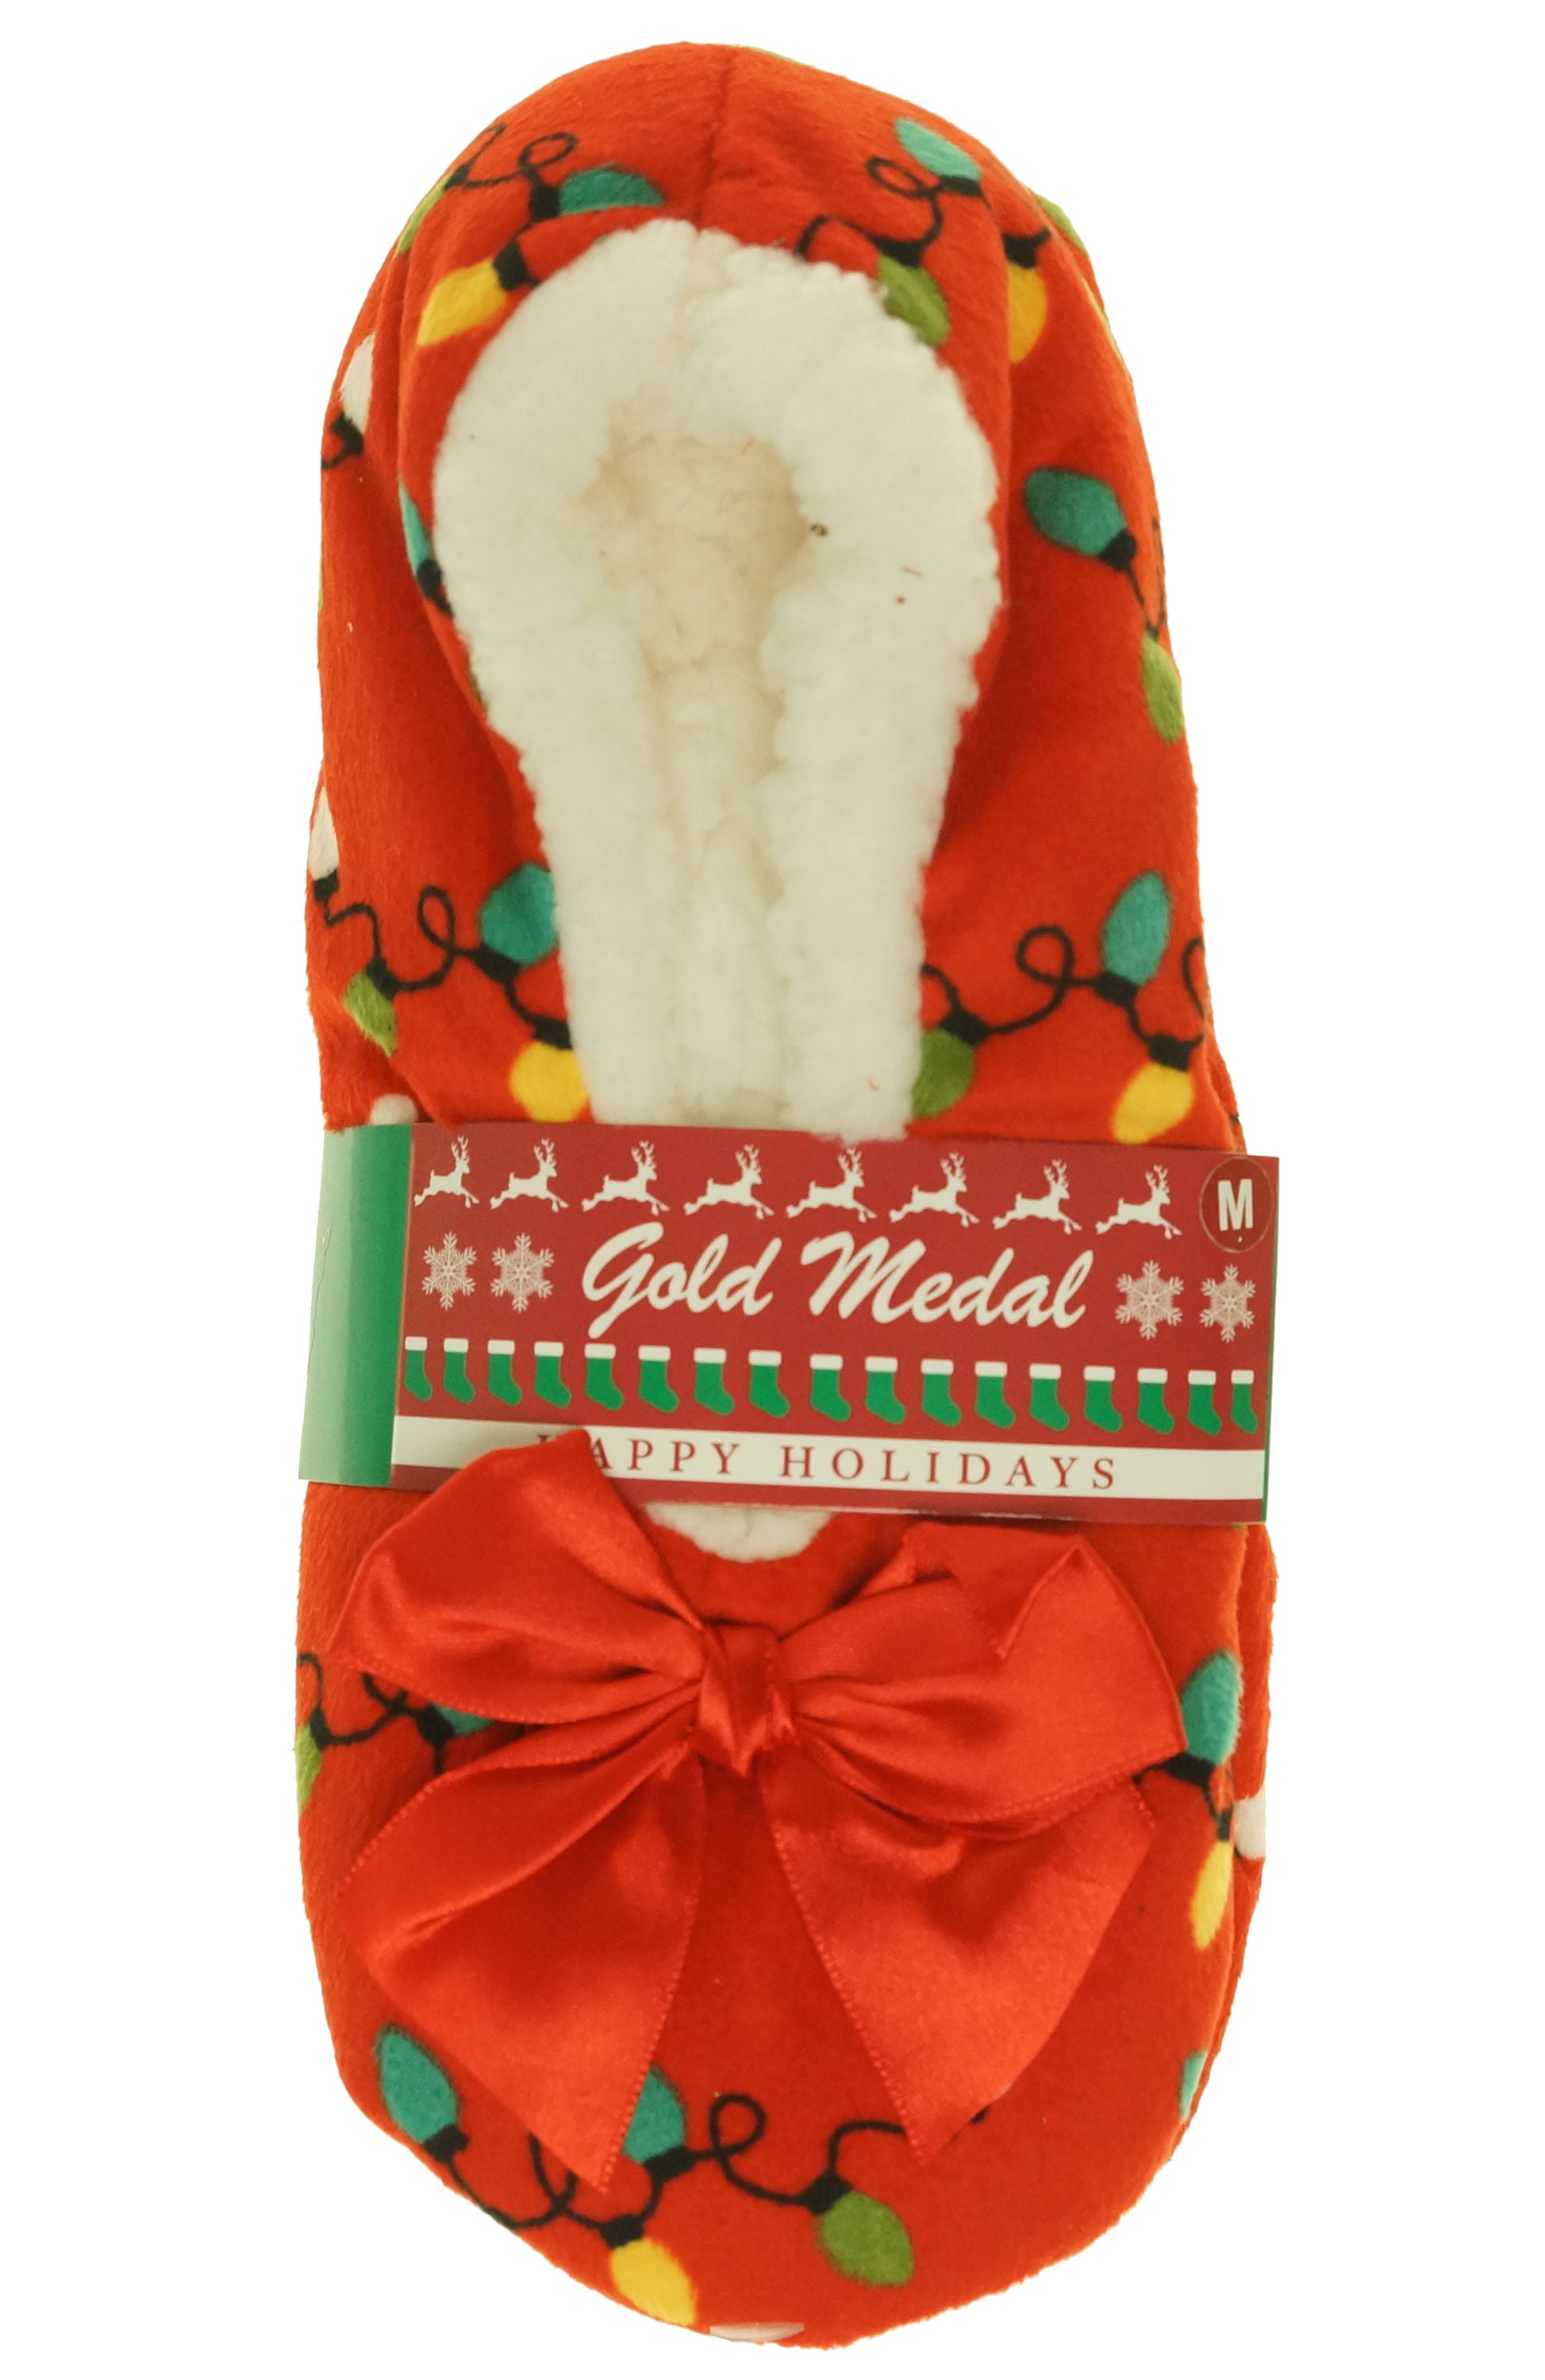 walmart christmas slippers